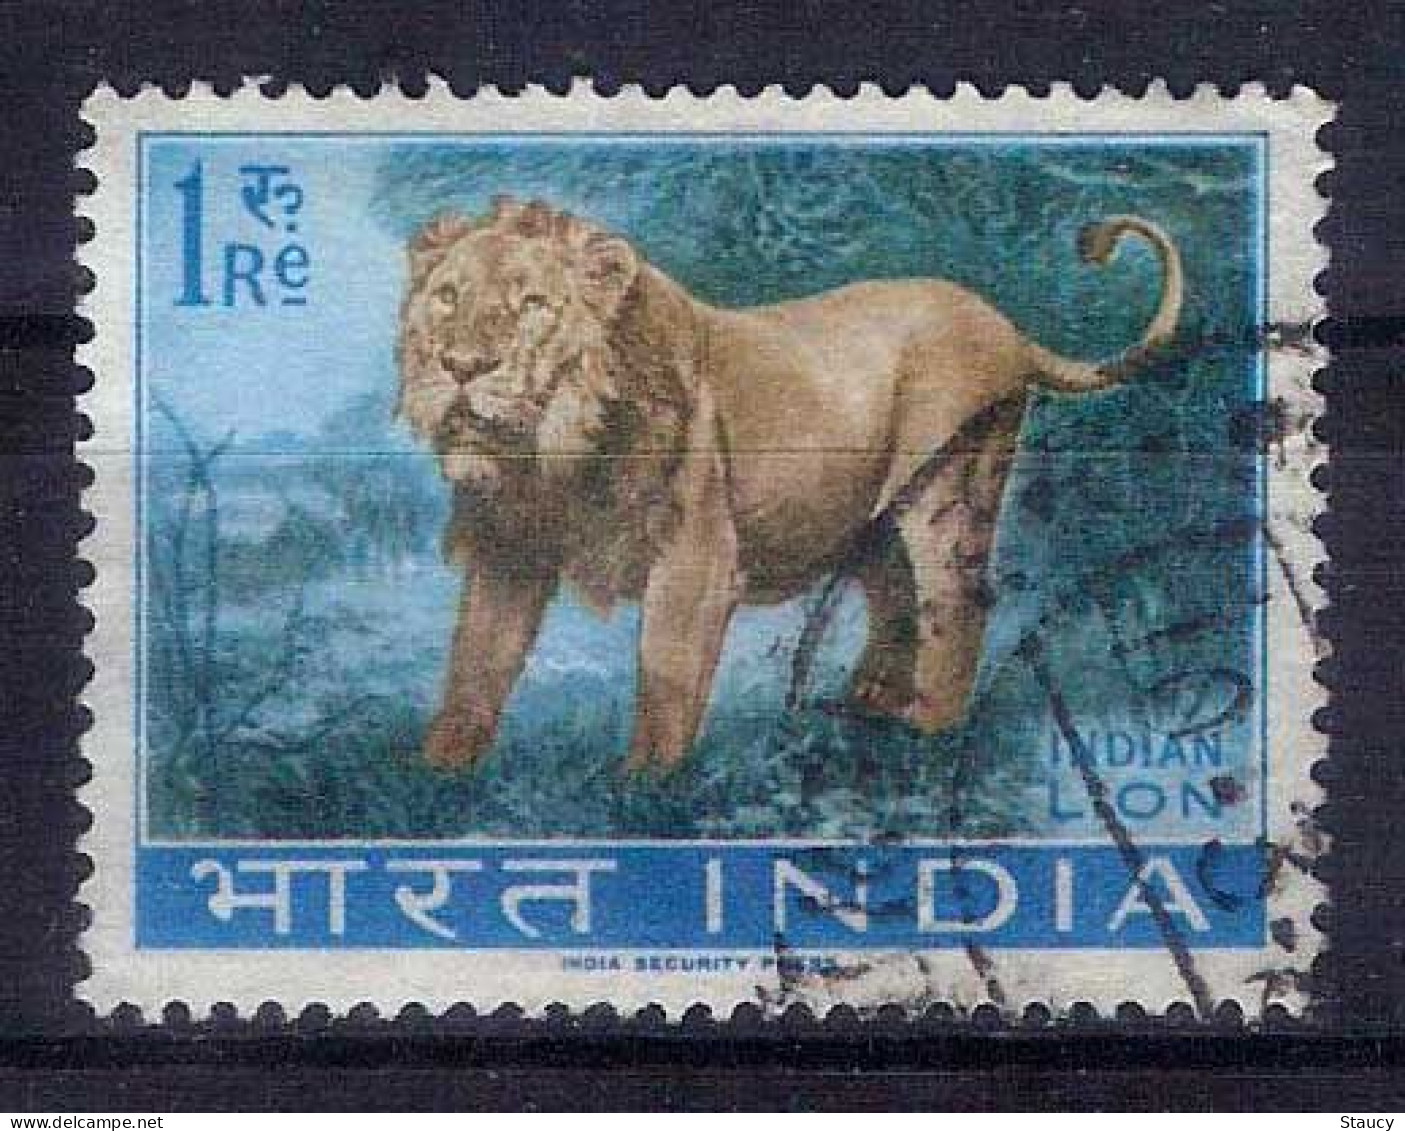 India 1963 ~ Wildlife Preservation - Fauna / Wild Animals 1v Stamp LION USED (Cancellation Would Differ) - Gebraucht